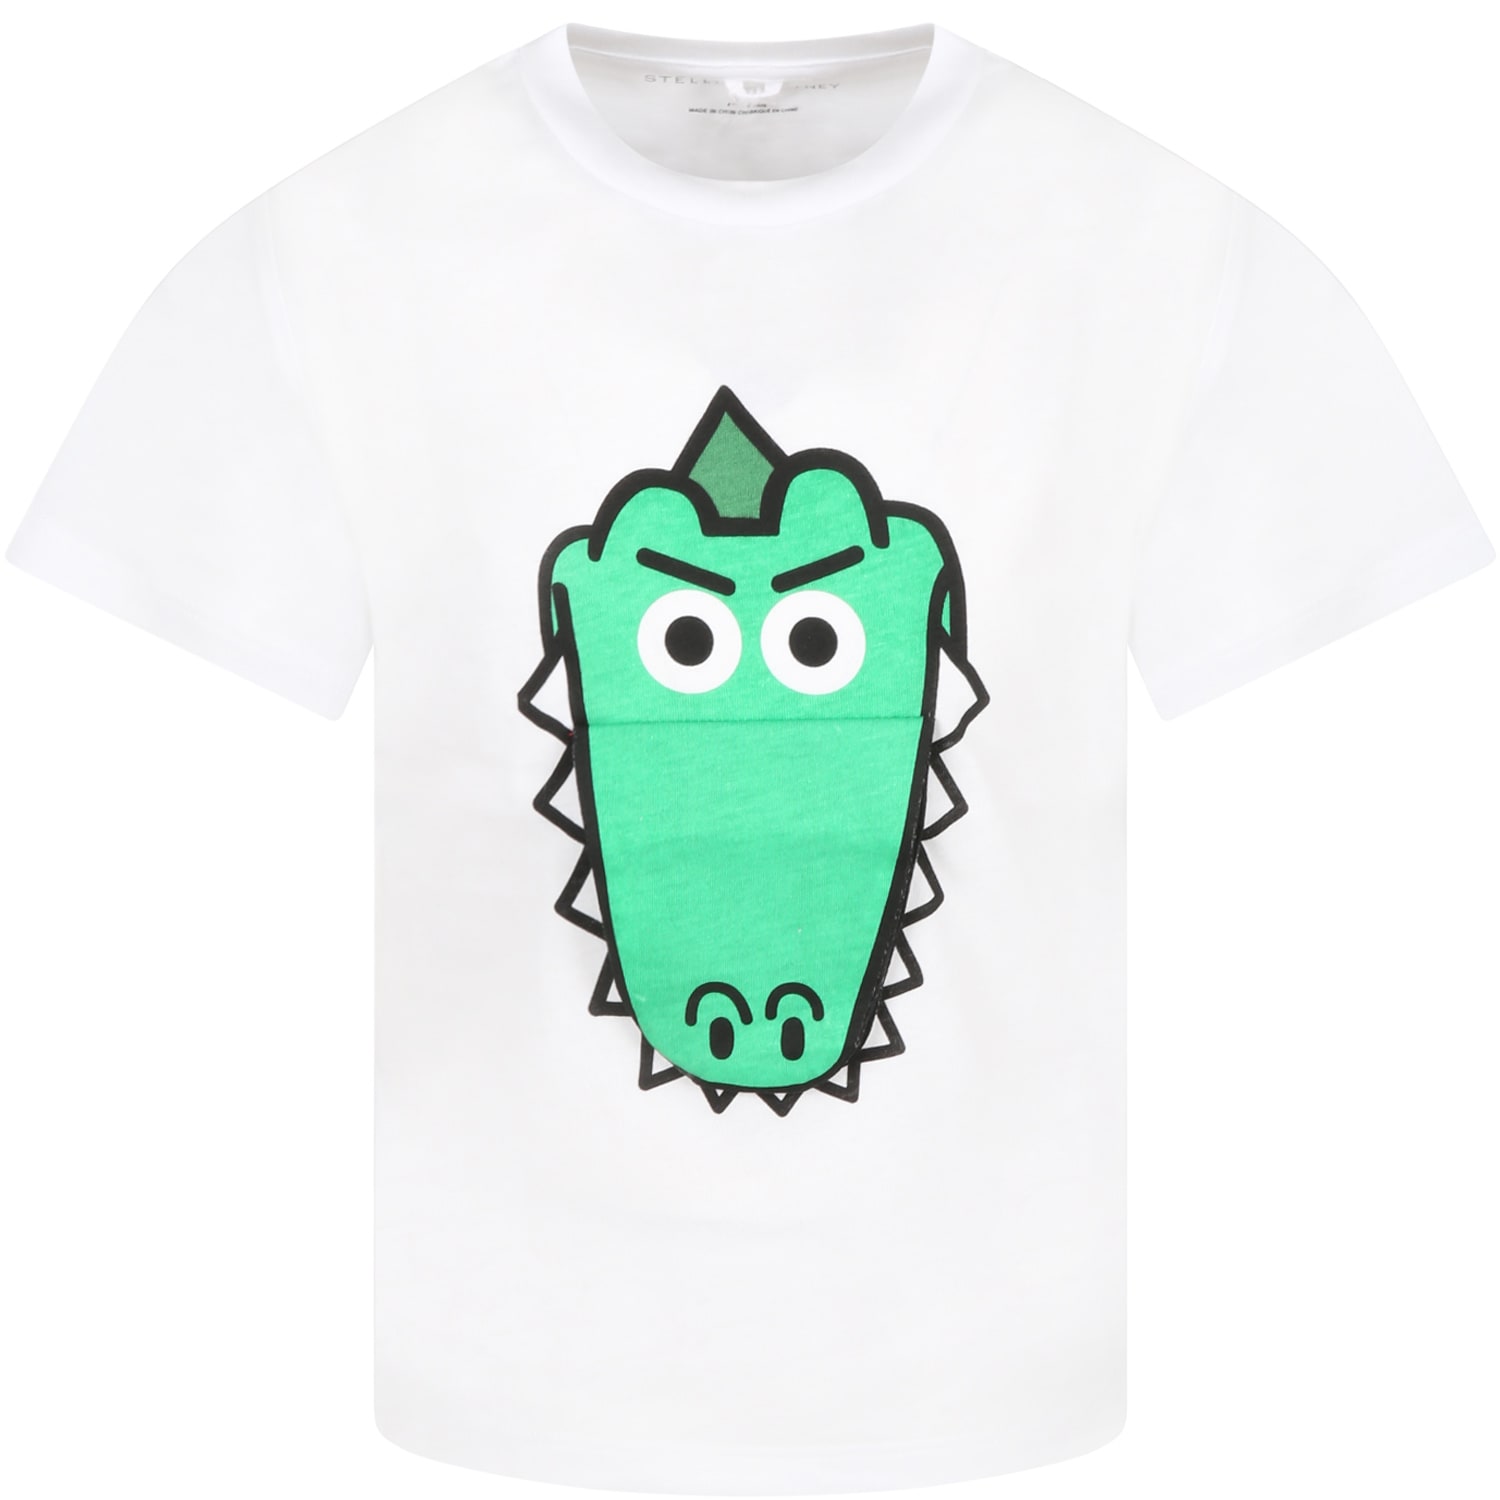 Stella McCartney White T-shirt For Boy With Green Crocodile